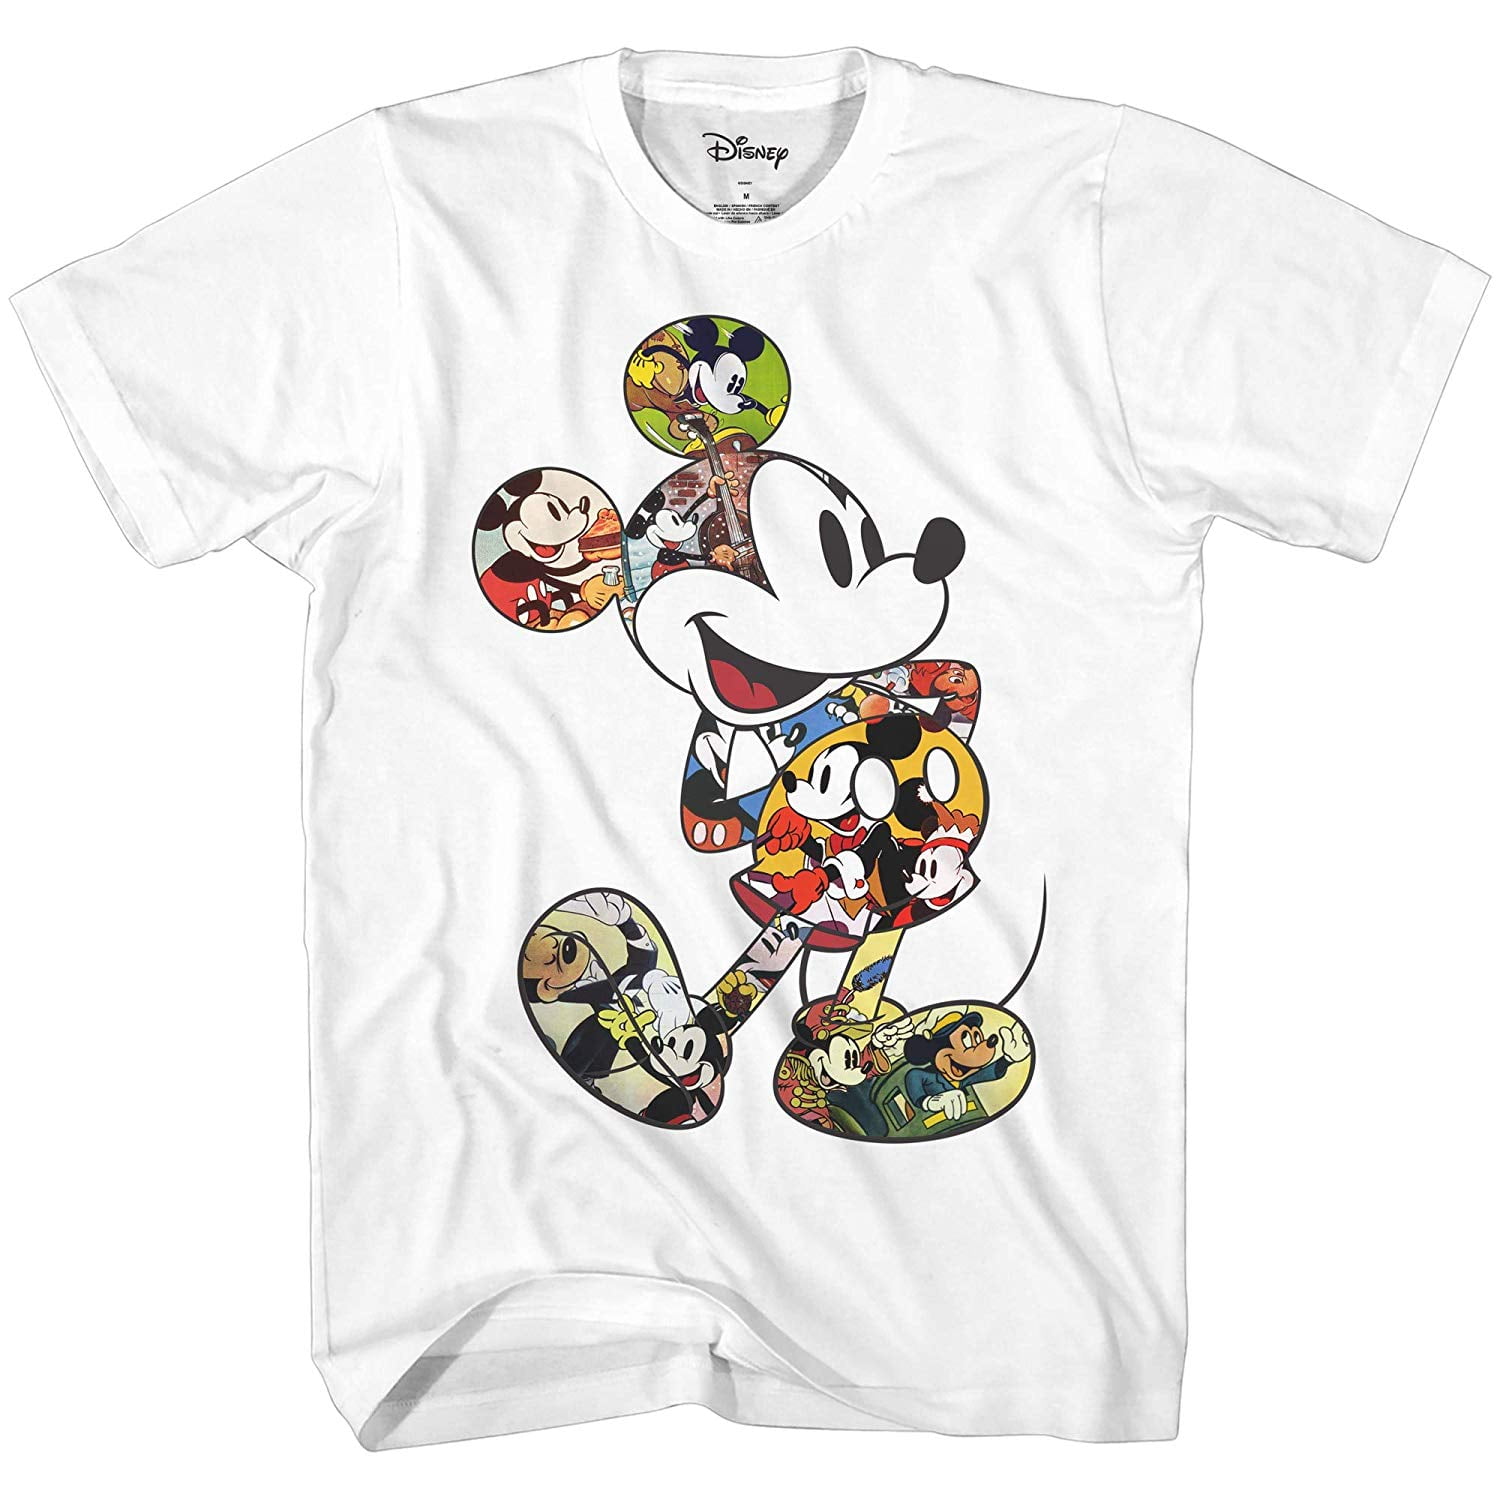 Disney Mickey Minnie Mouse Pluto Donald Duck Goofy World Disneyland Funny Adult Tee Graphic T-Shirt for Men Tshirt